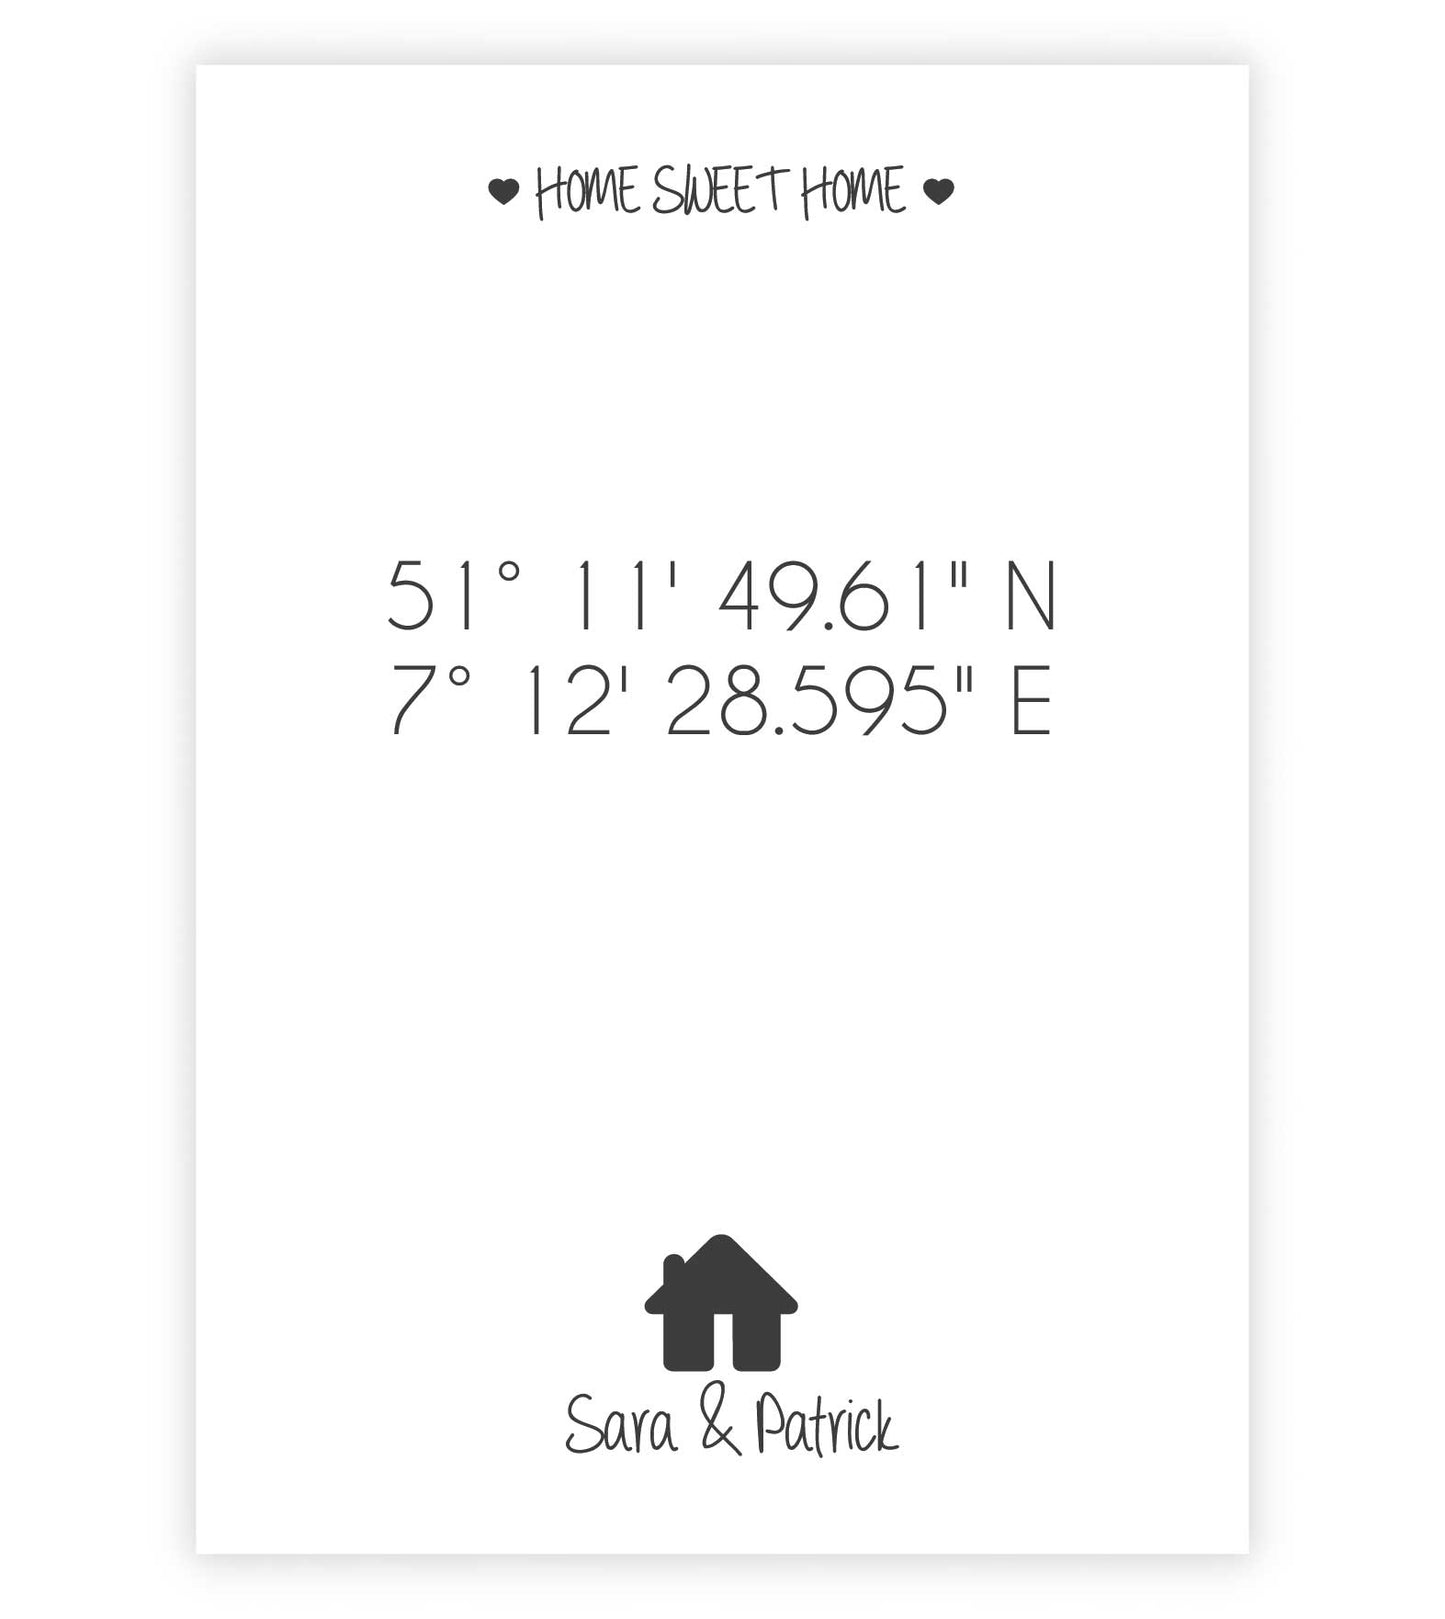 Affiche personnalisée "HOME SWEET HOME" - Maison 